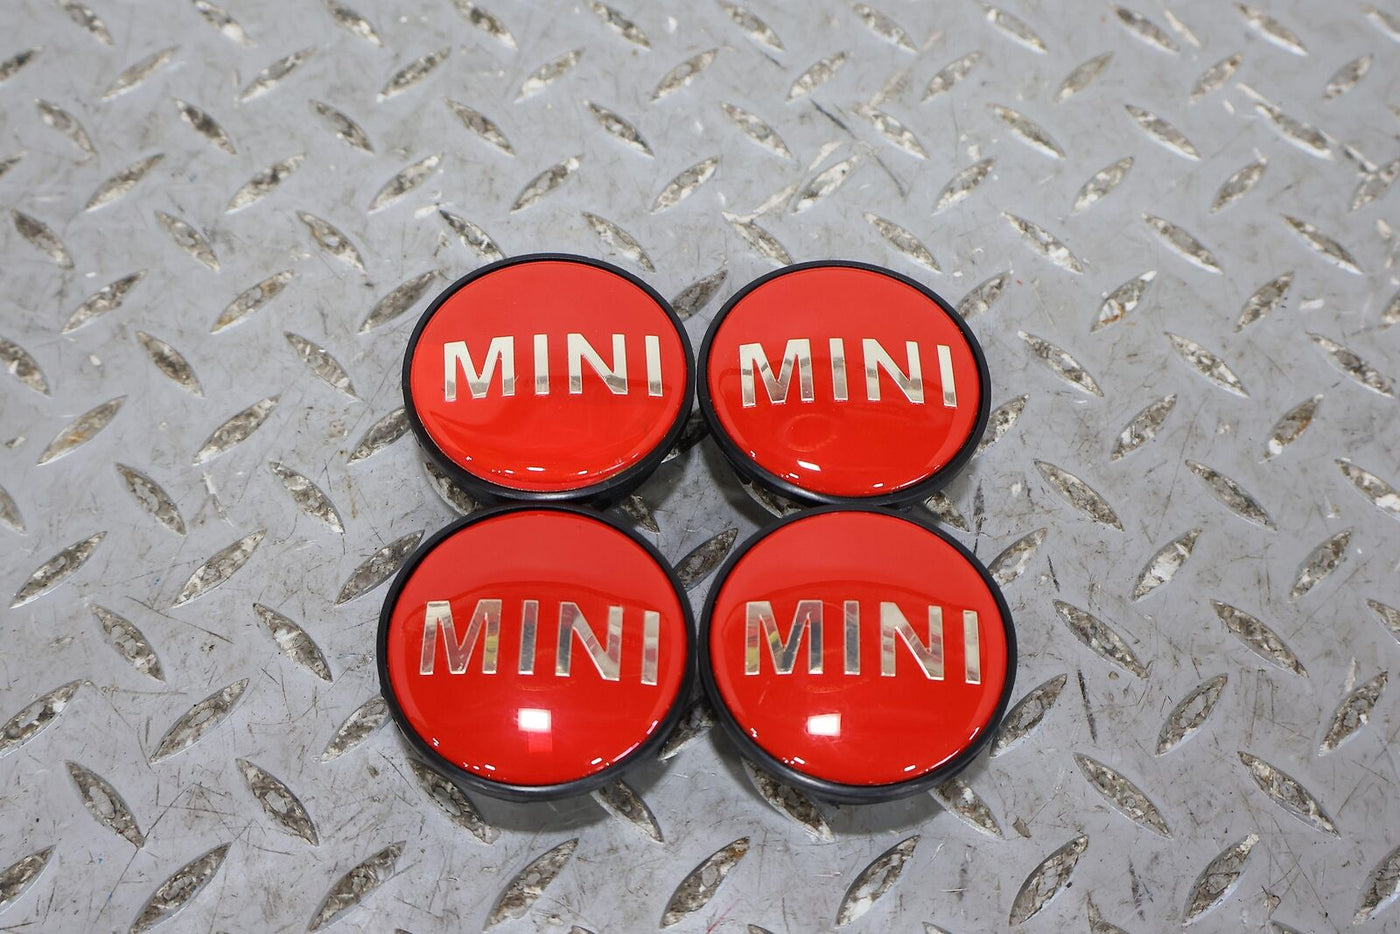 07-13 Mini Cooper S Set of 4 Wheel Center Caps (Chili Red) 83K Miles